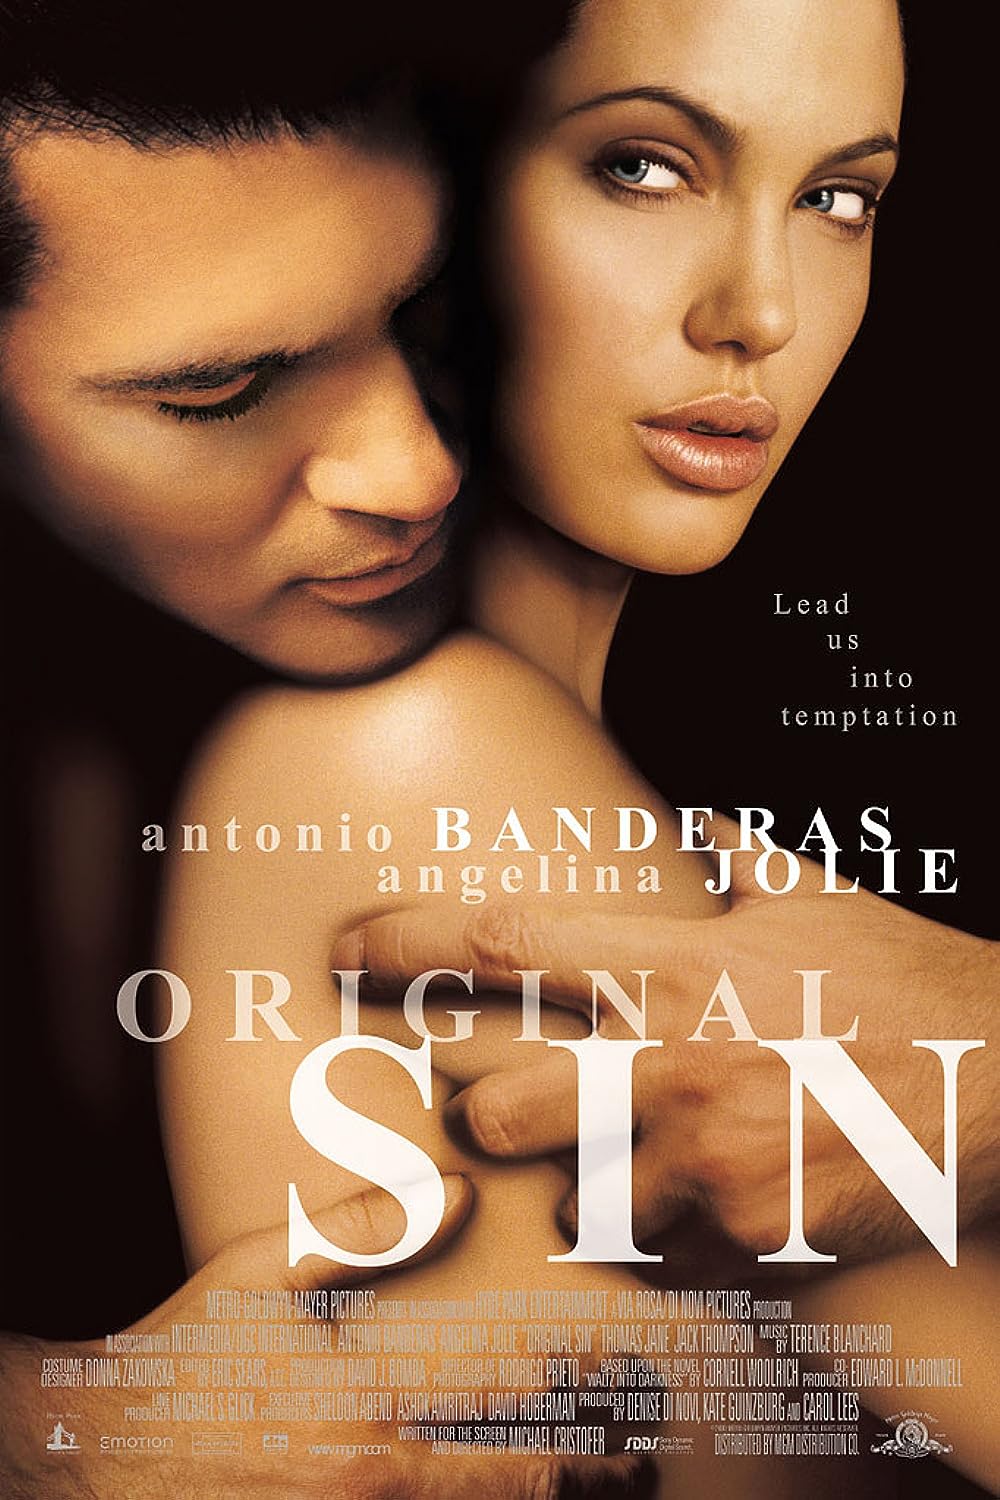 bonnie spaulding recommends Original Sin Hot Scene